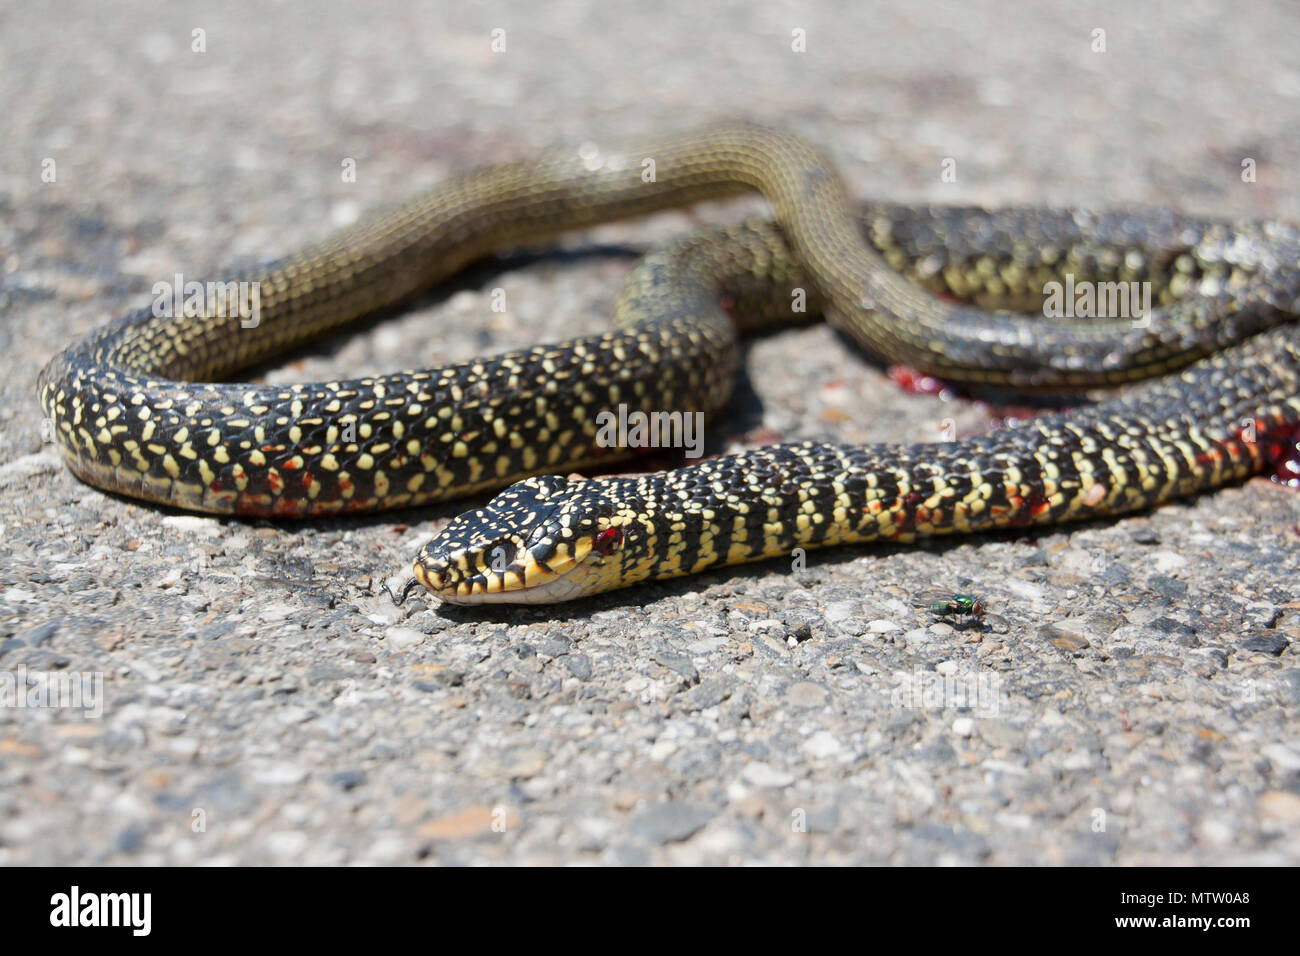 dead snake on road Stock Photo